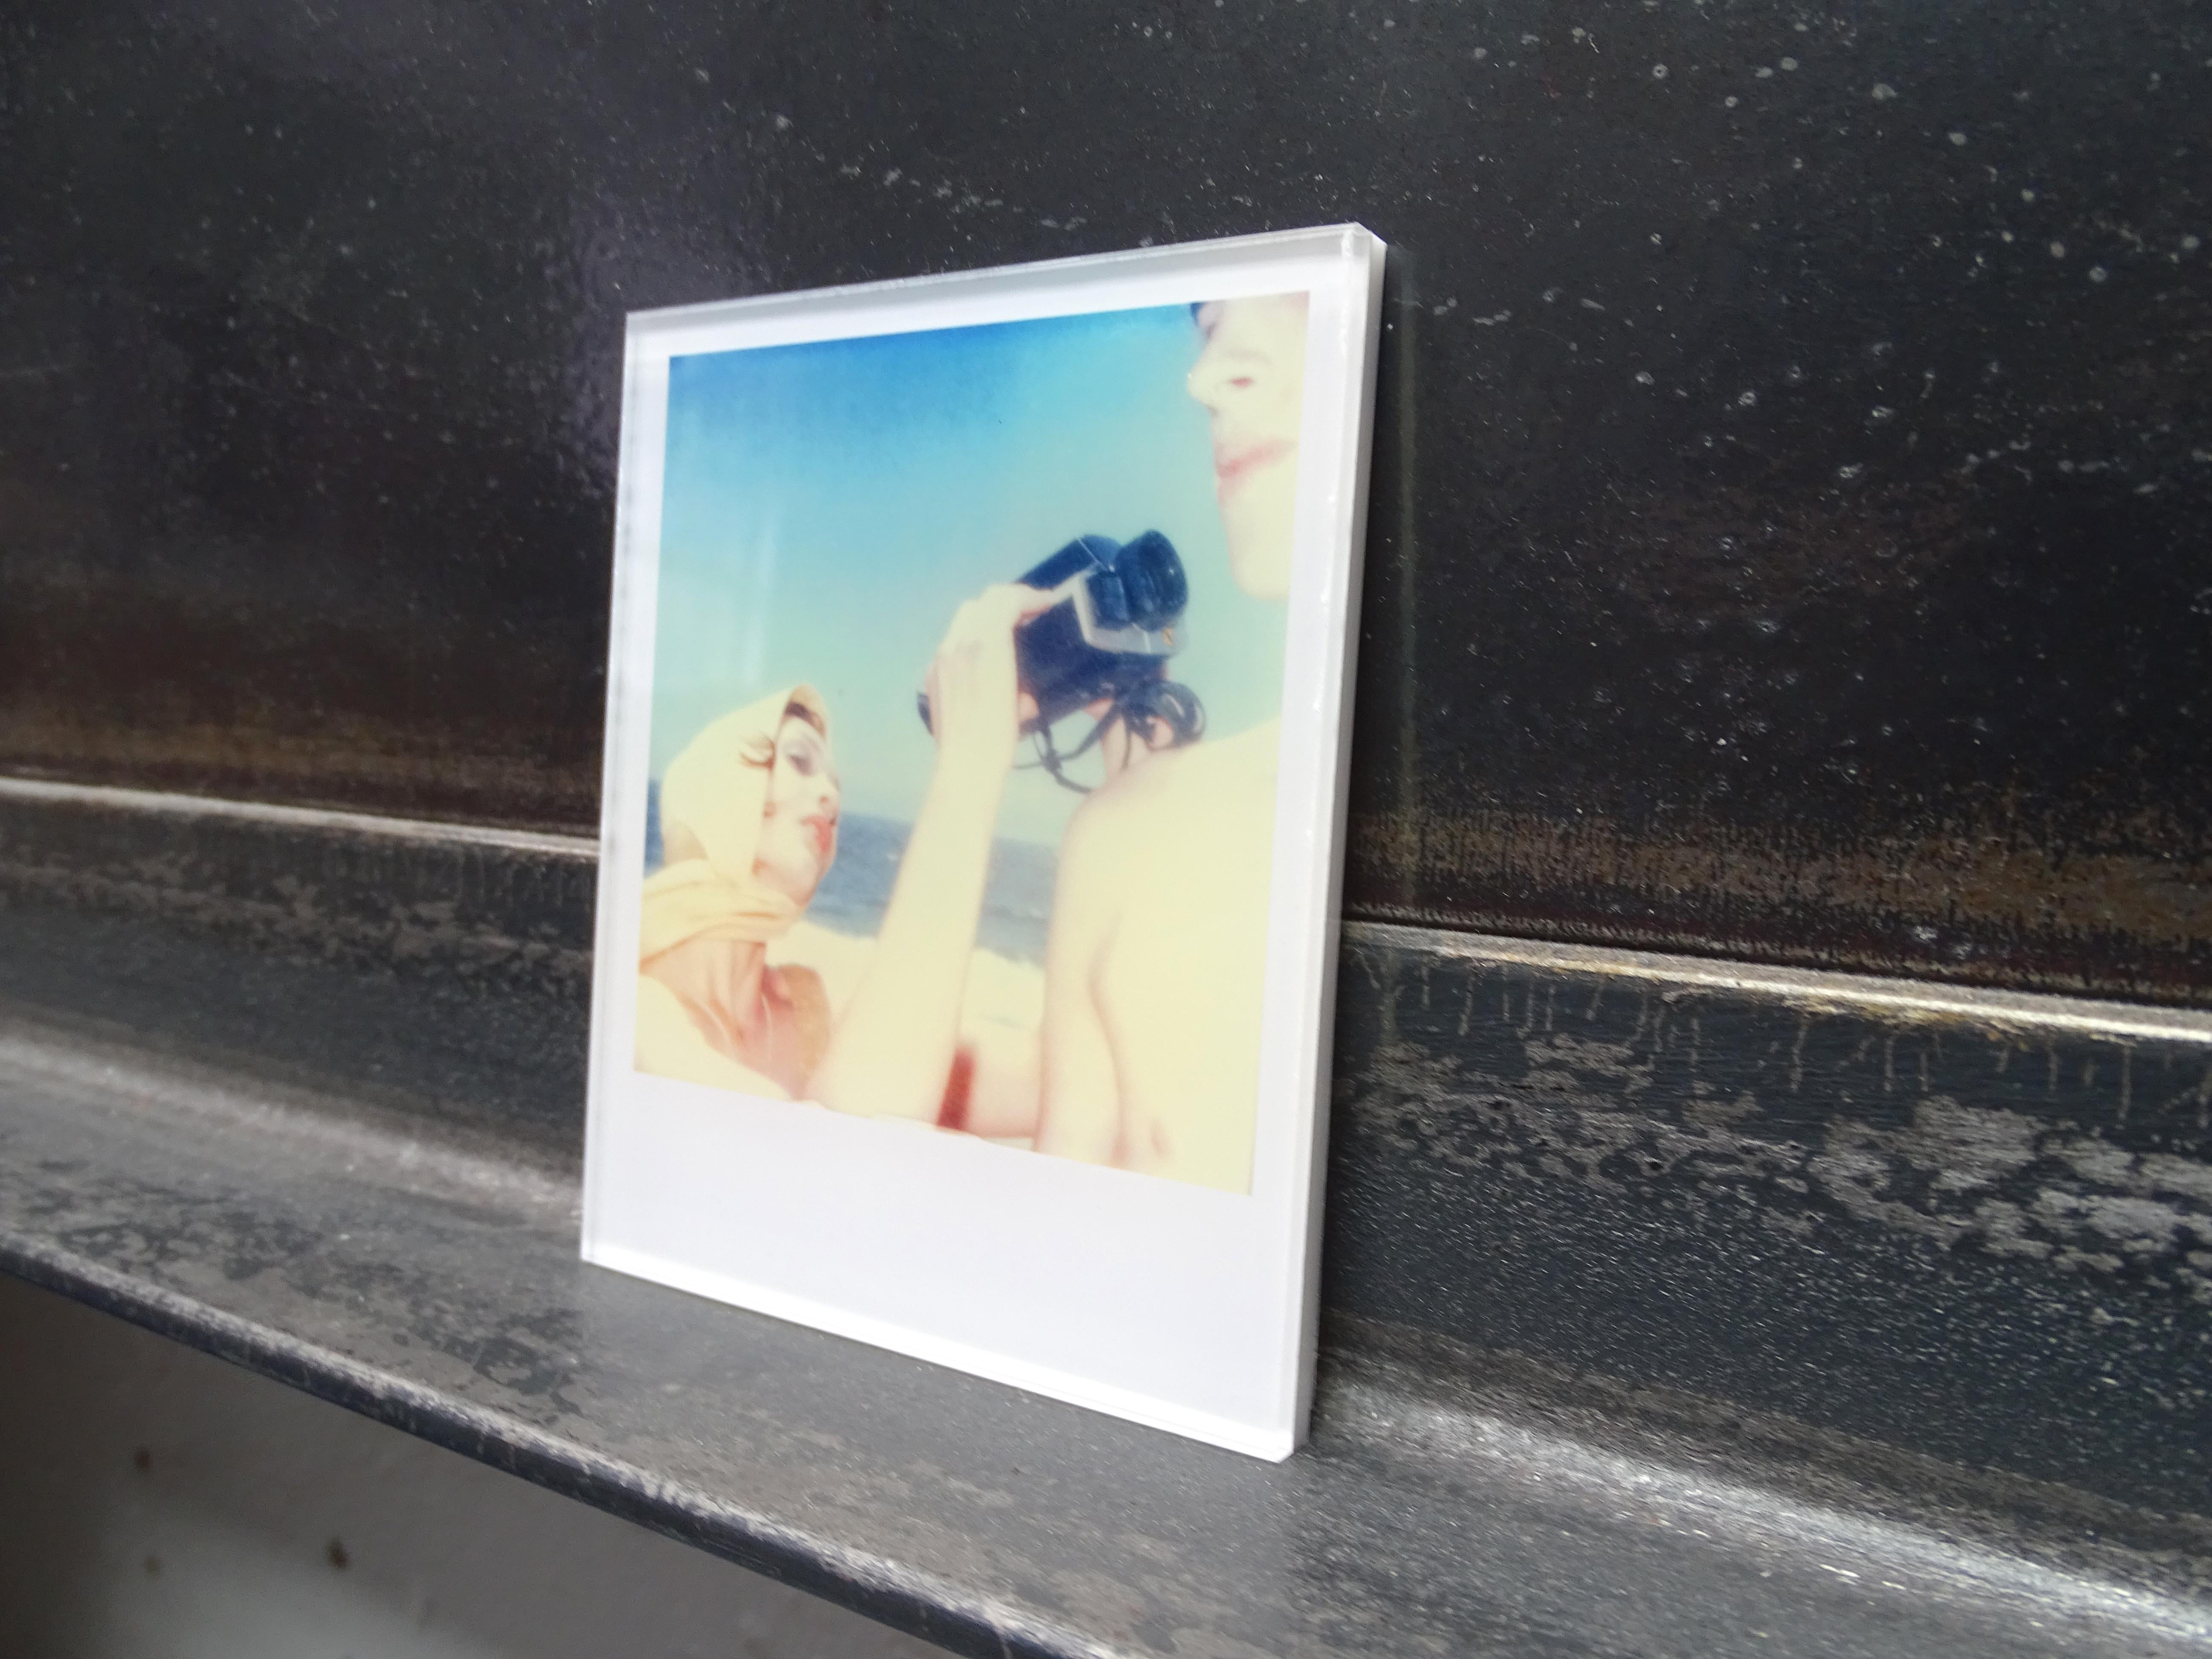 Beachshoot Mini #09 - mounted - featuring Rdaha Mitchell, based on a Polaroid - Photograph by Stefanie Schneider